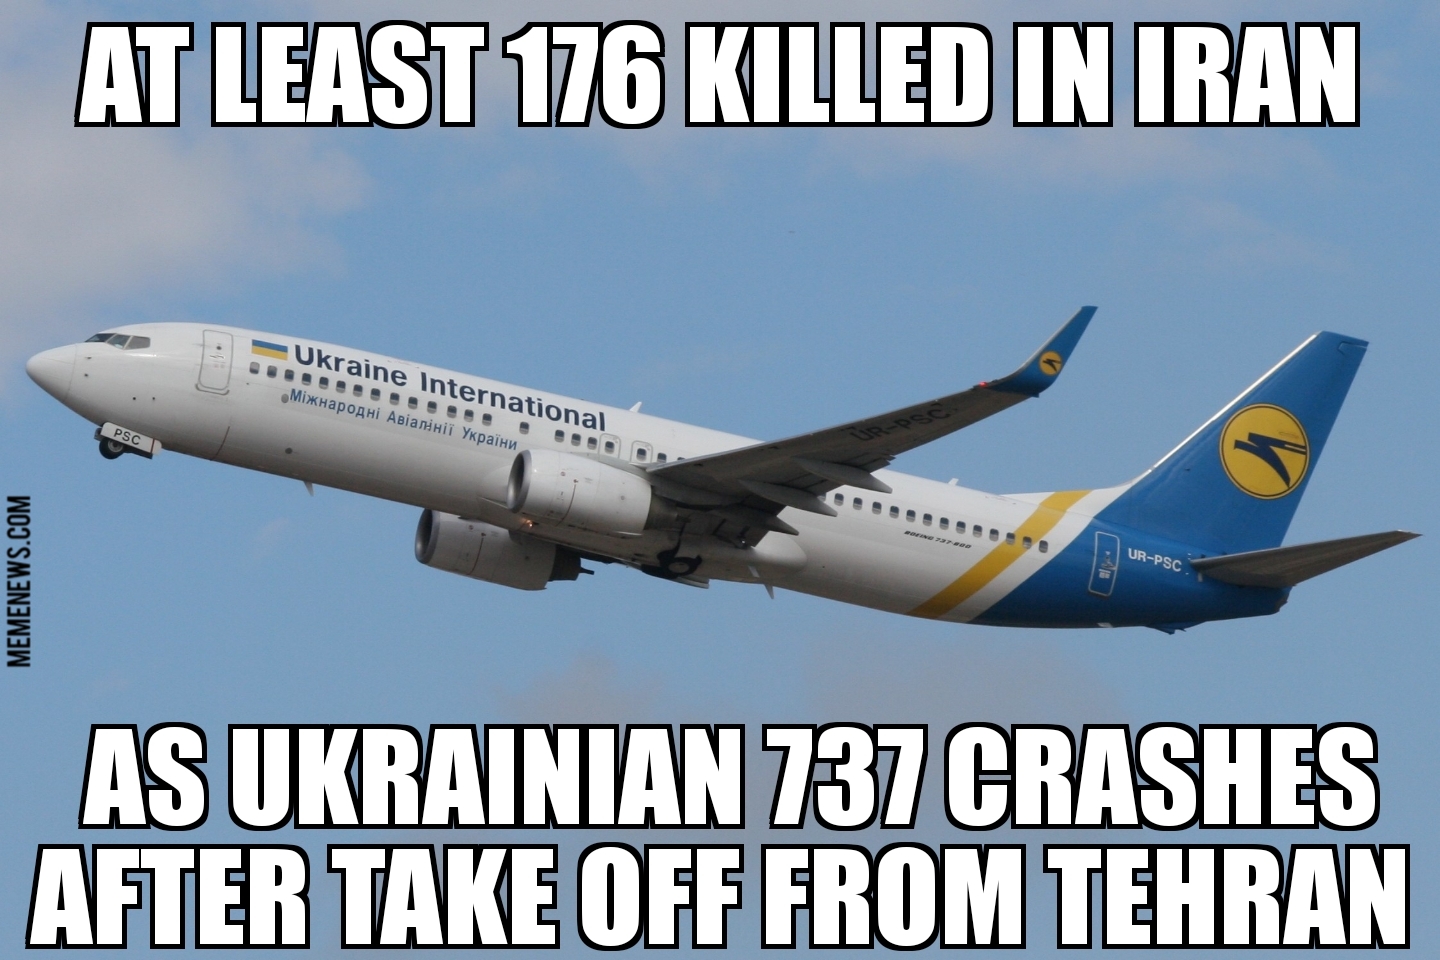 Ukrainian 737 crashes in Iran